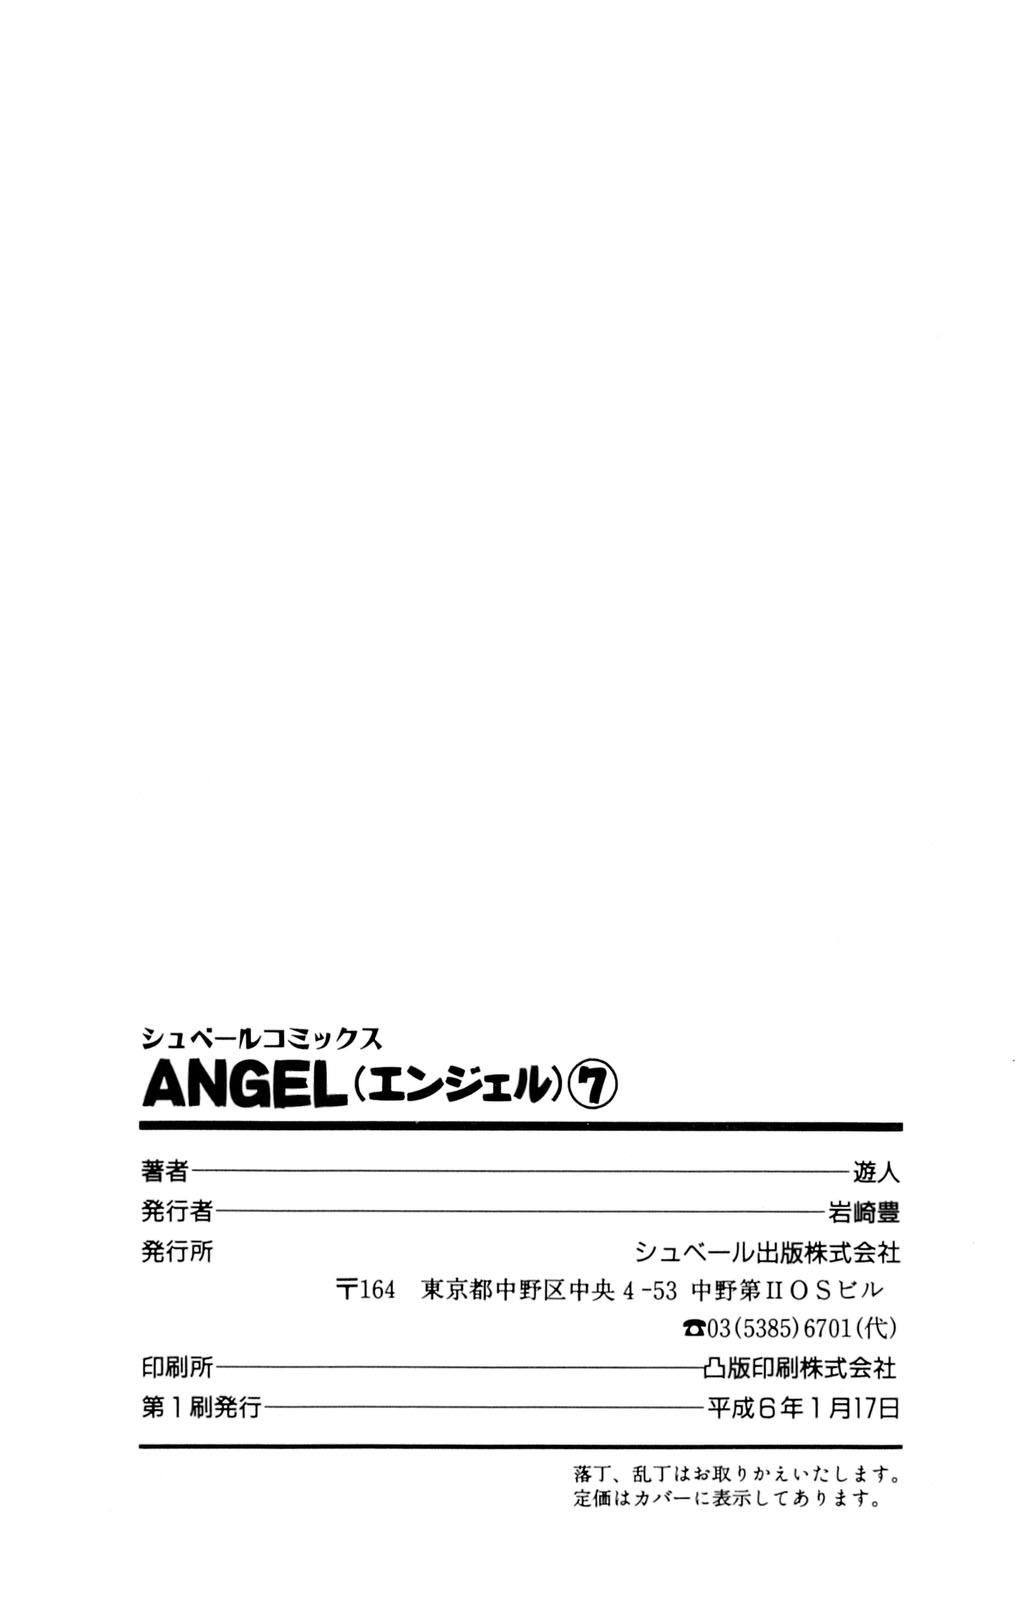 ANGEL 7 197